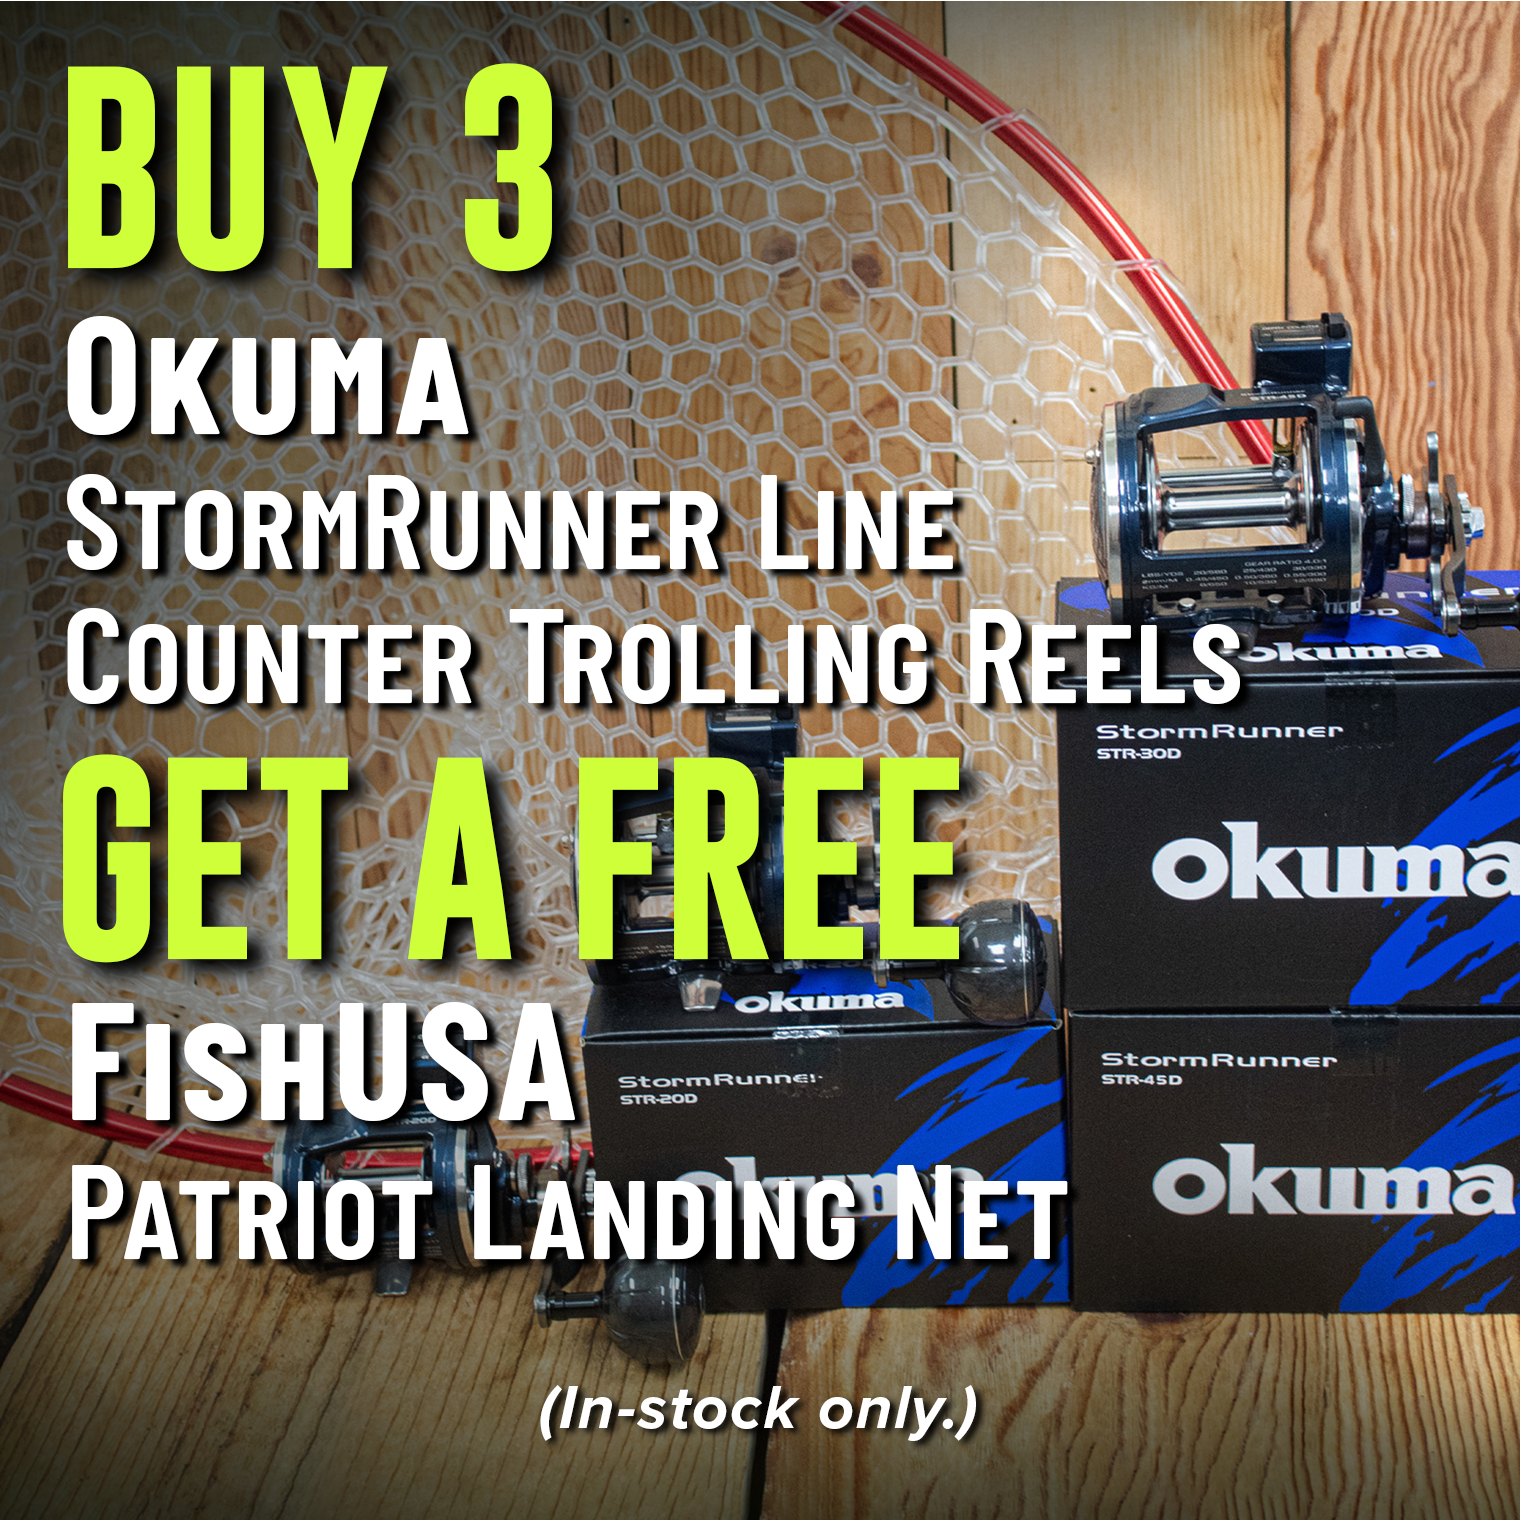 Buy 3 Okuma StormRunner Line Counter Trolling Reels Get a Free FishUSA Patriot Landing Net (In-stock only.)